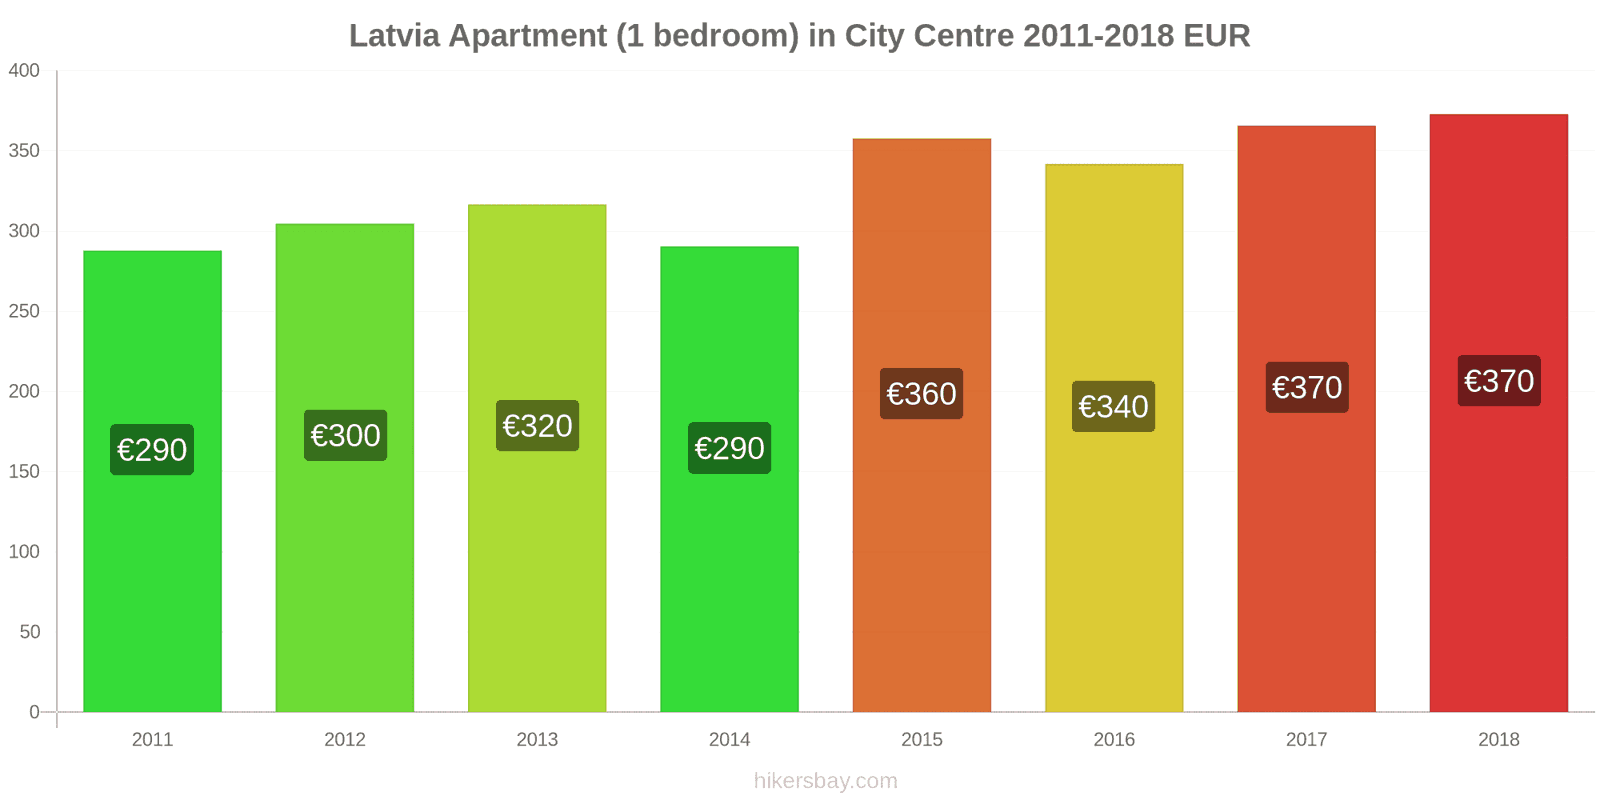 Latvia price changes Apartment (1 bedroom) in city centre hikersbay.com